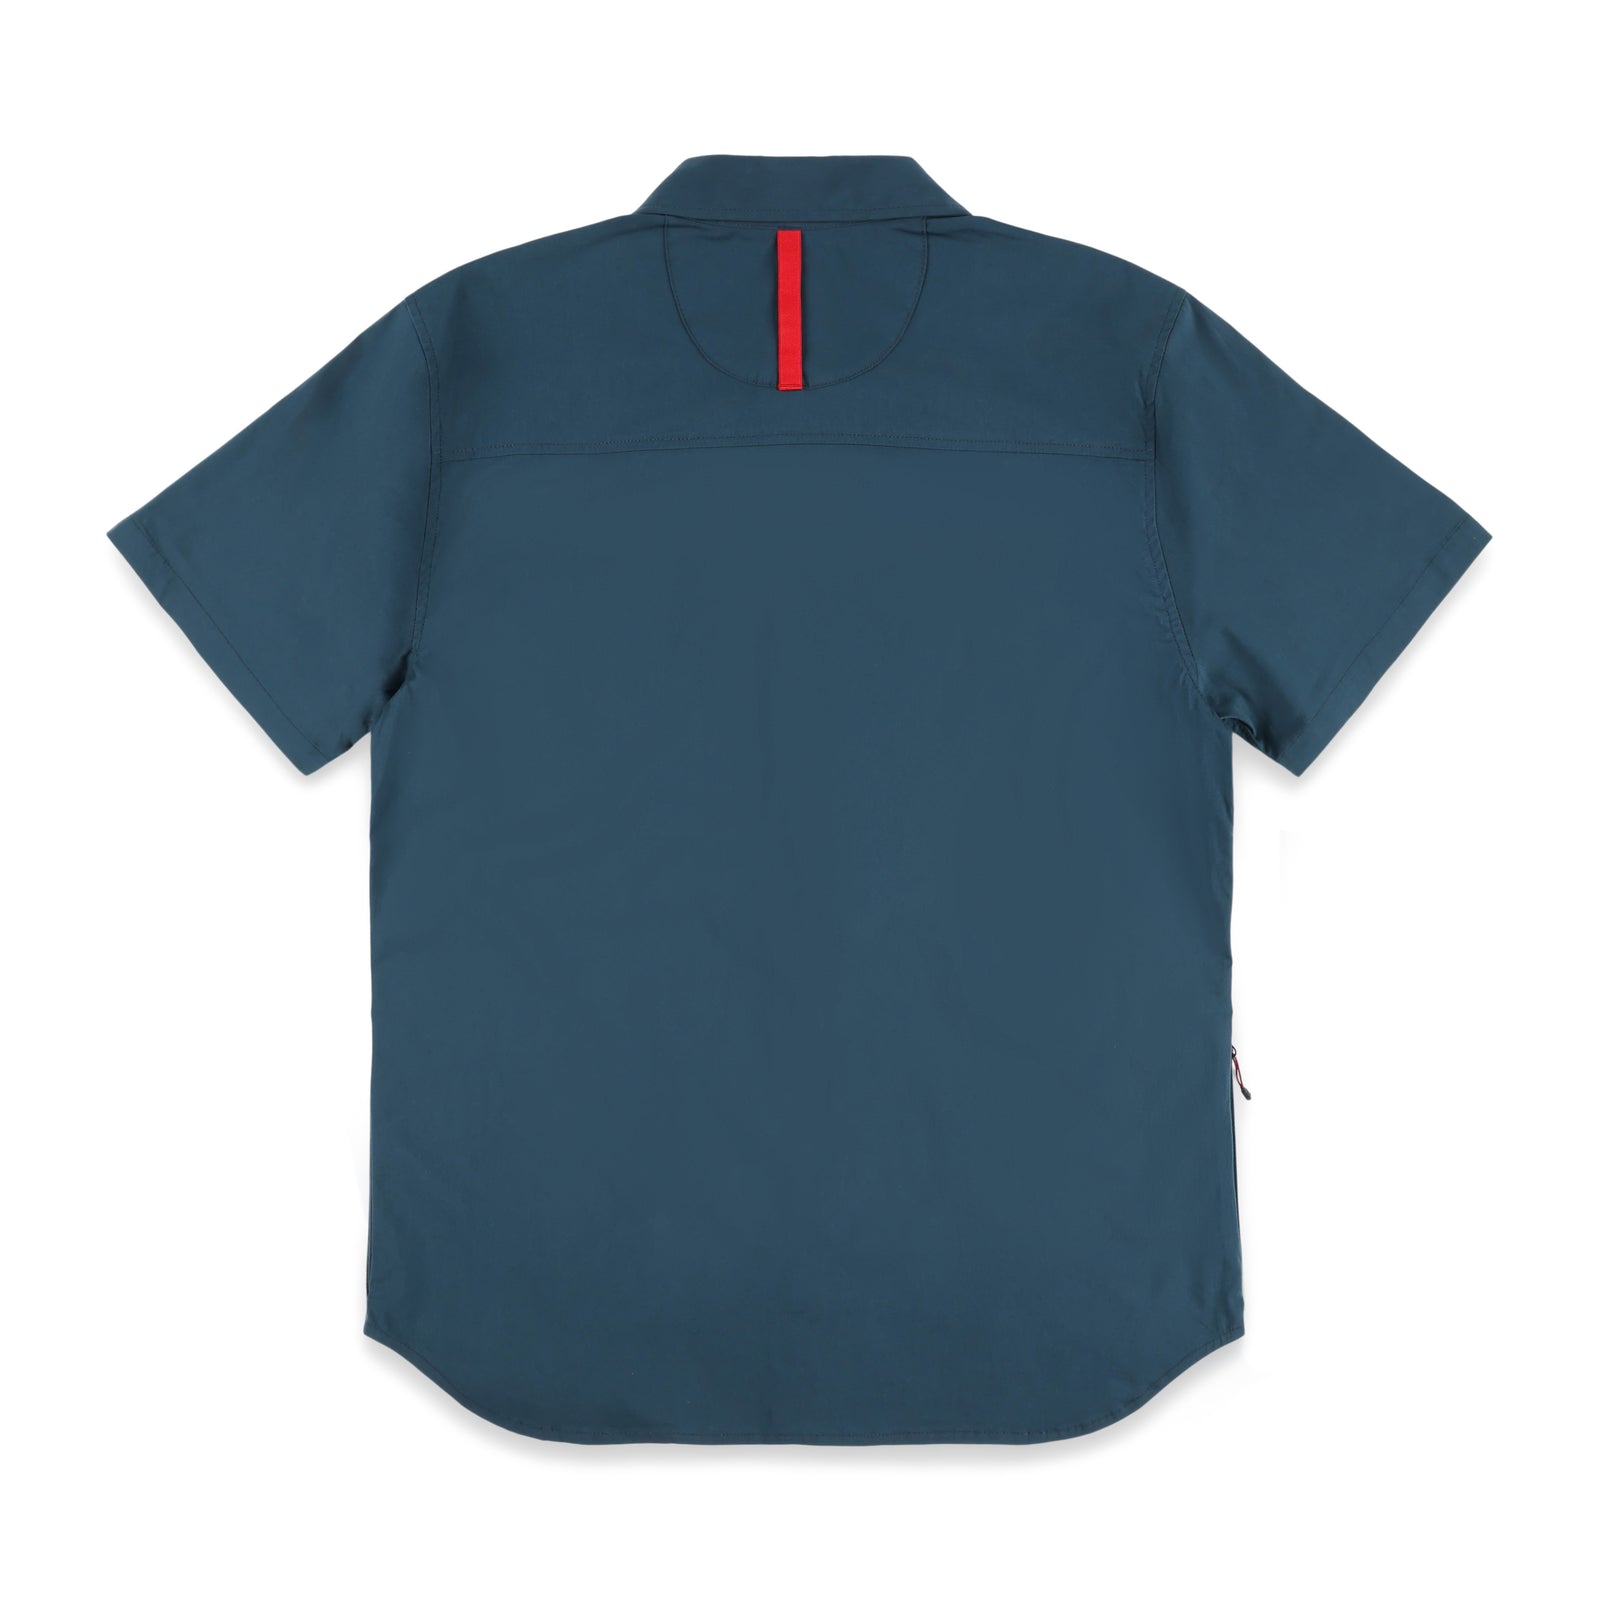 Topo Designs Global Shirt - Short Sleeve - Men's in "Pond Blue"